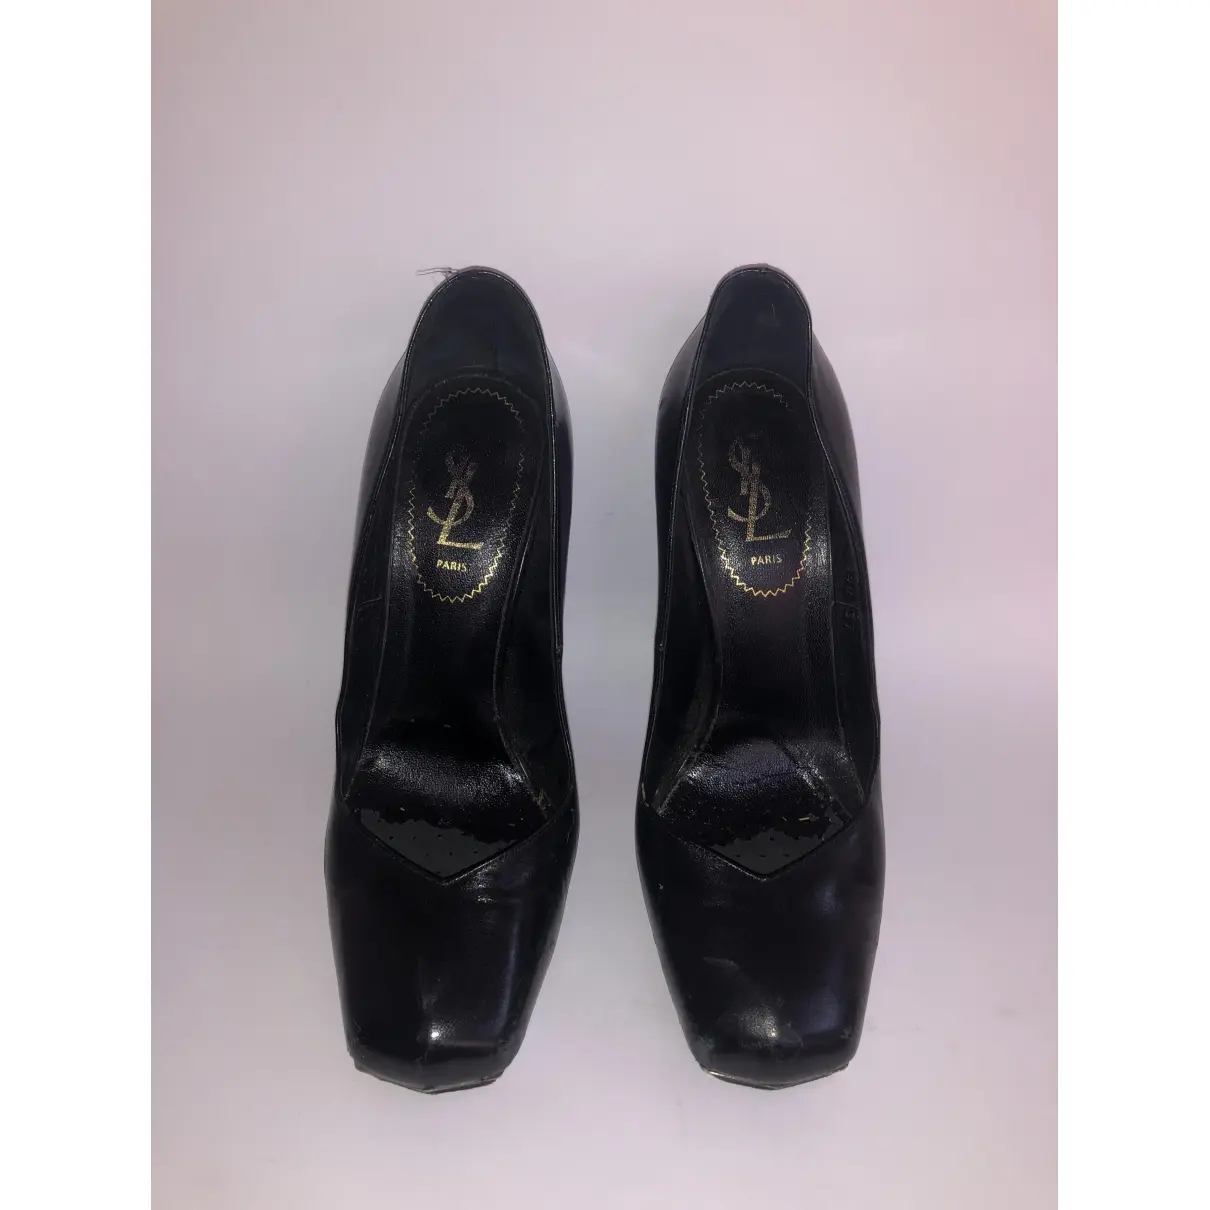 Yves Saint Laurent Leather heels for sale - Vintage